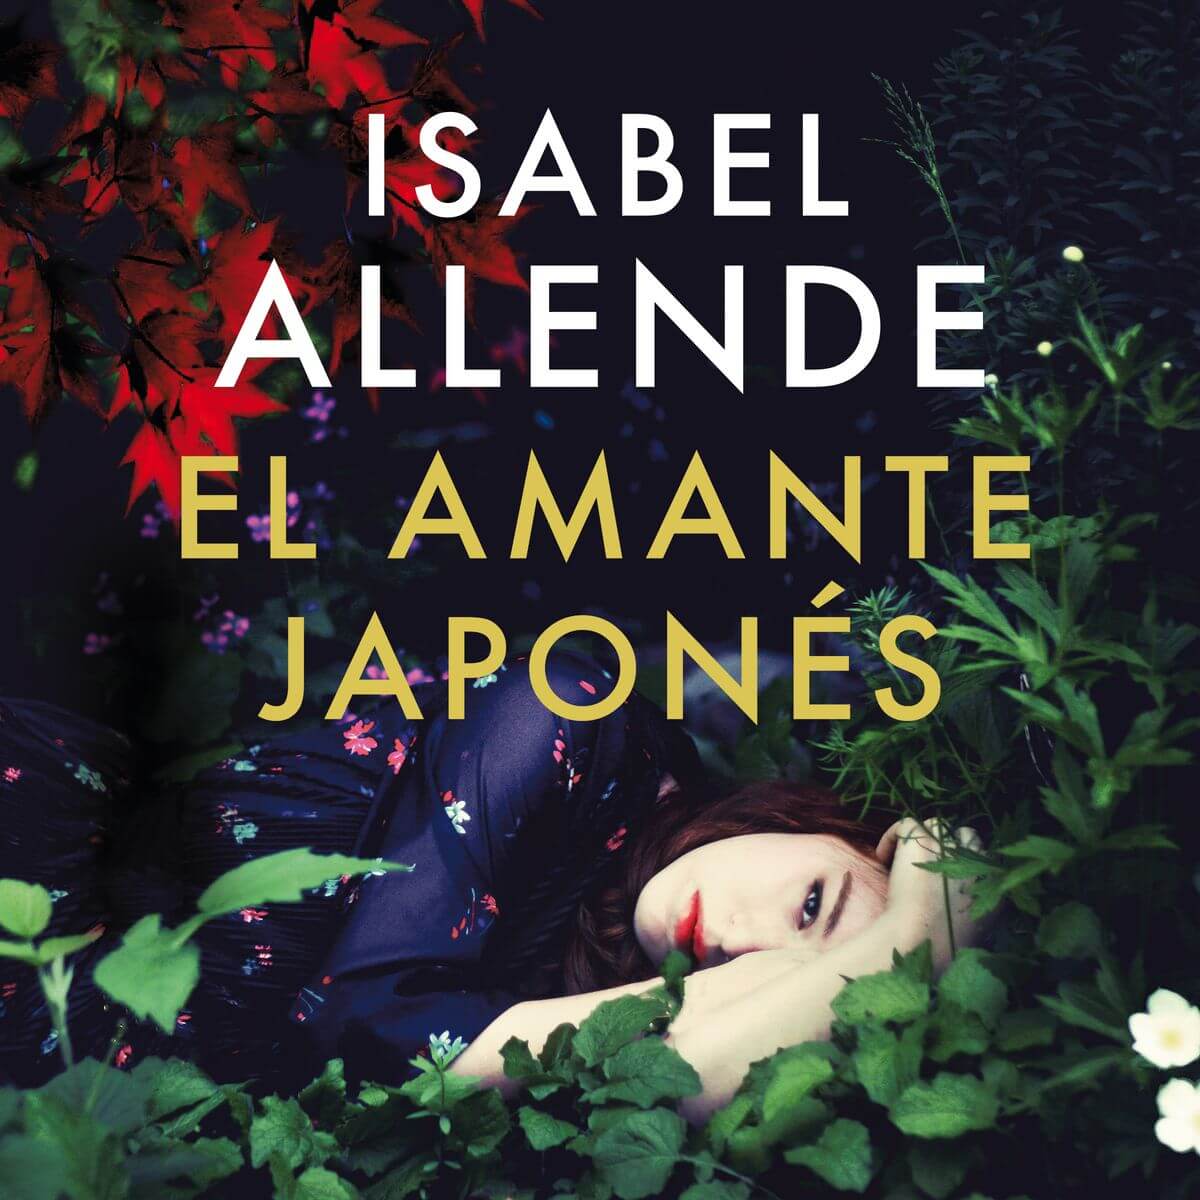 El amante japonés de Isabel Allende